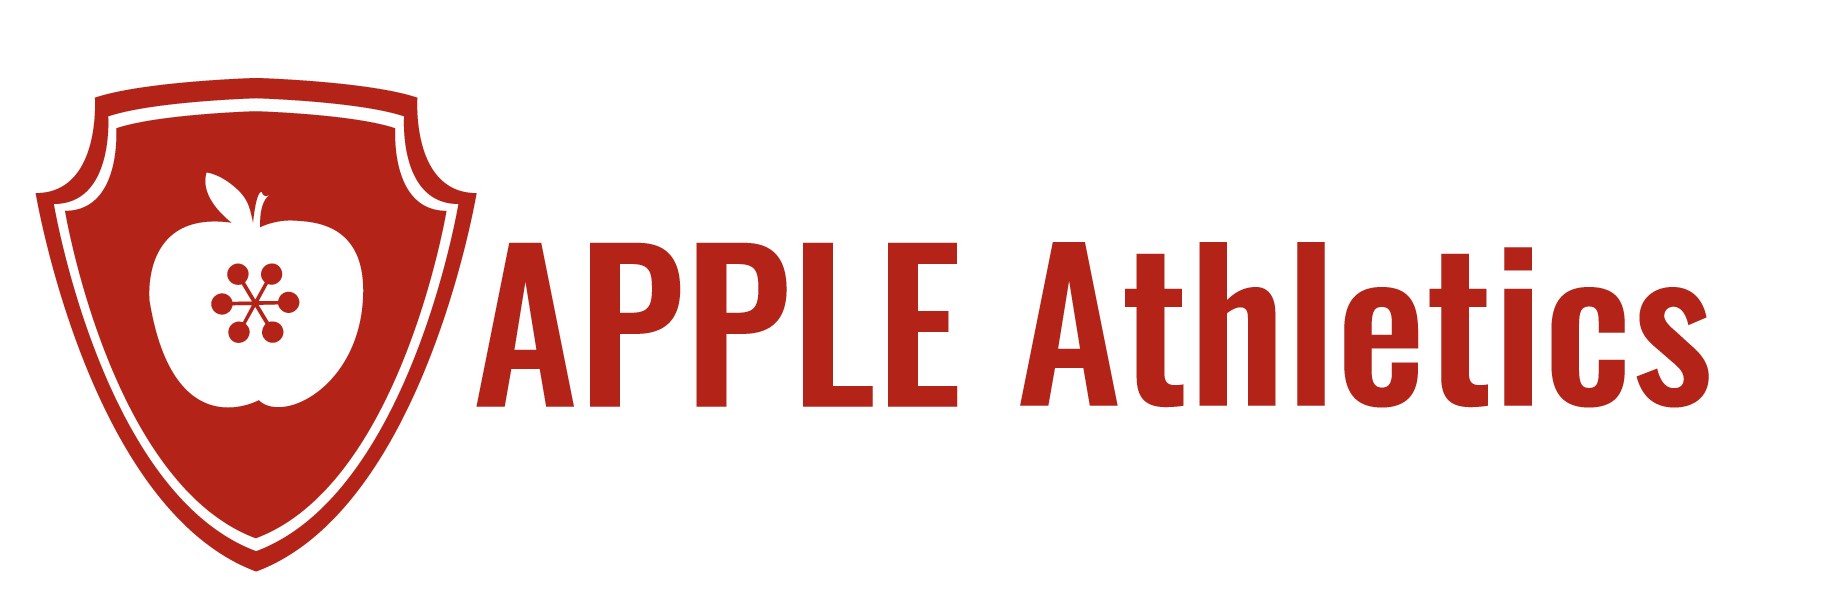 APPLE Athletics logo